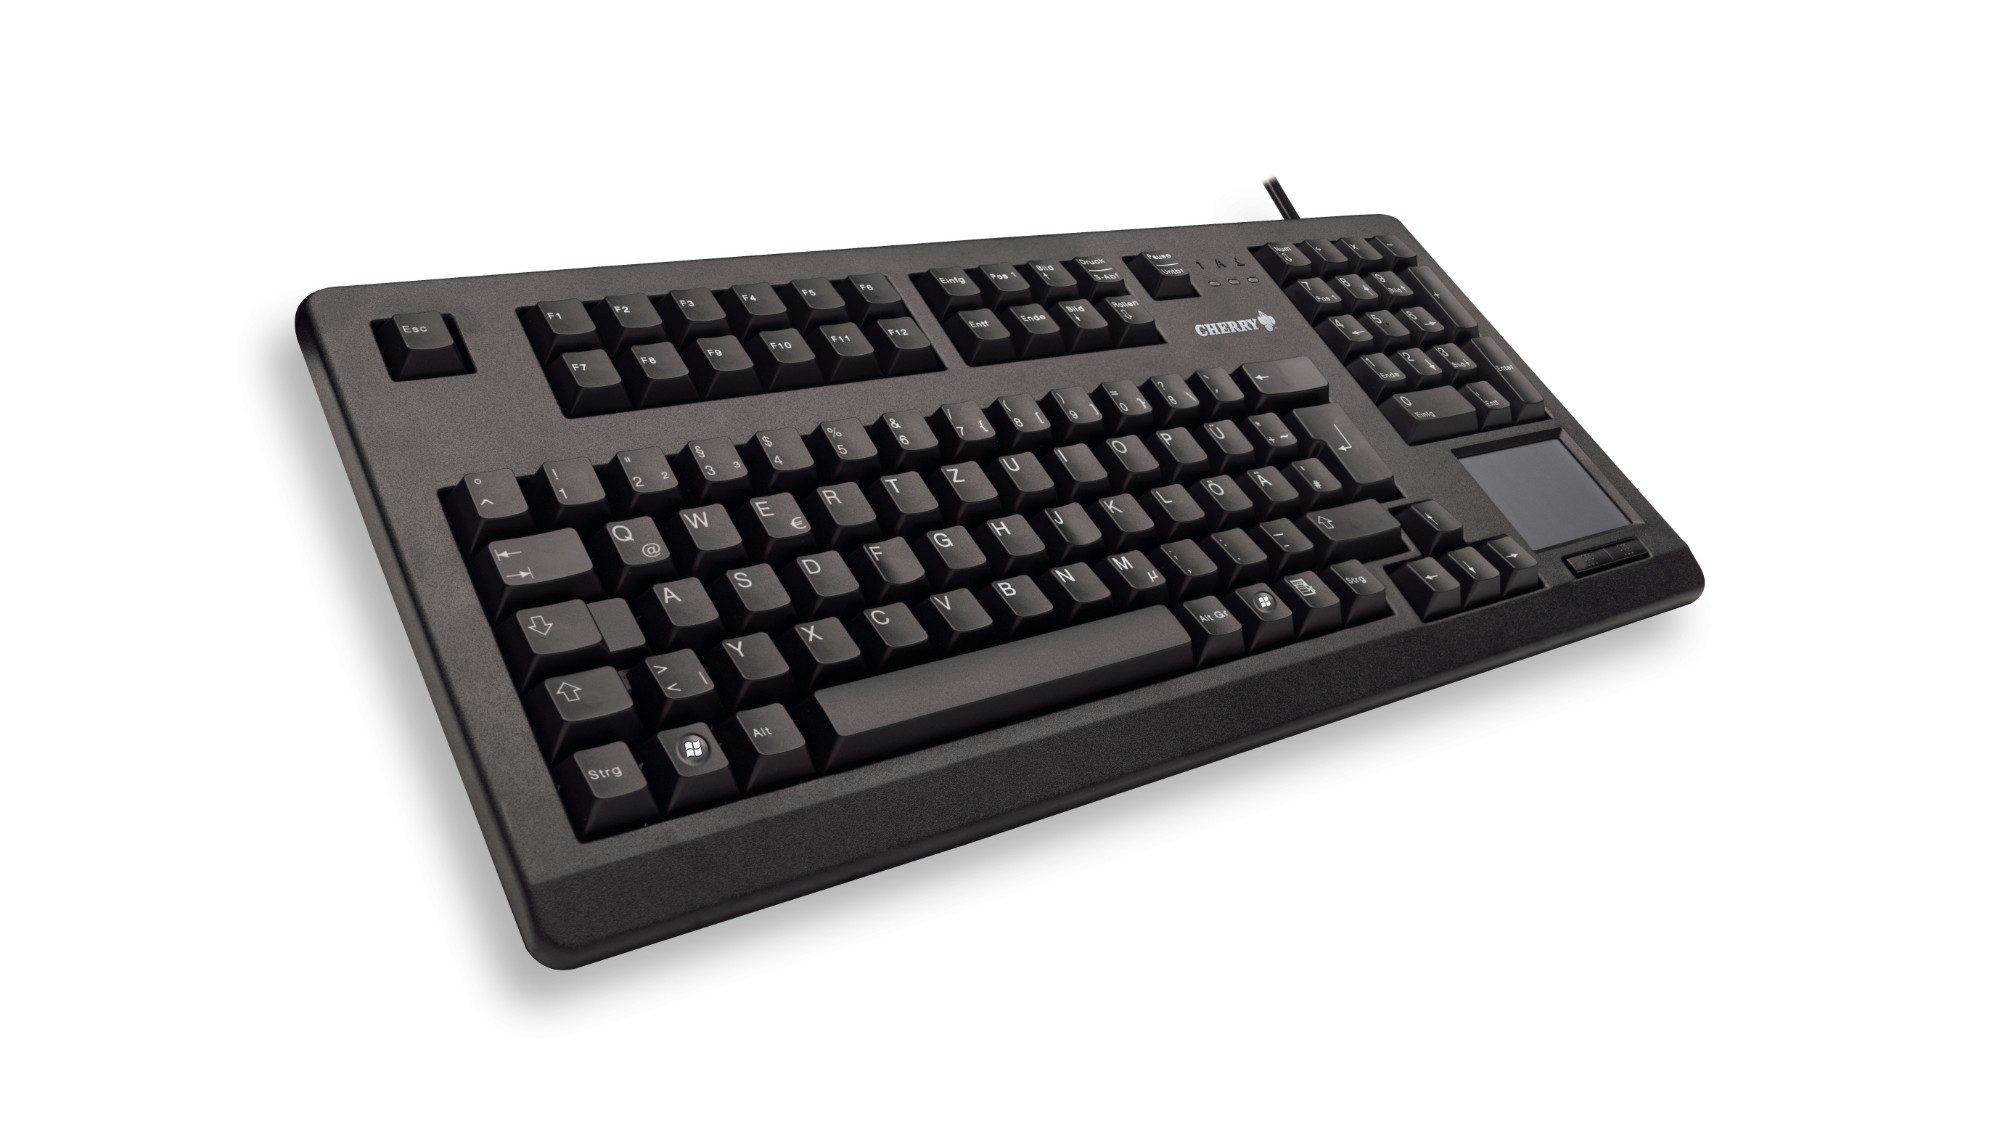 CHERRY TouchBoard G80-11900 keyboard USB QWERTY English Black